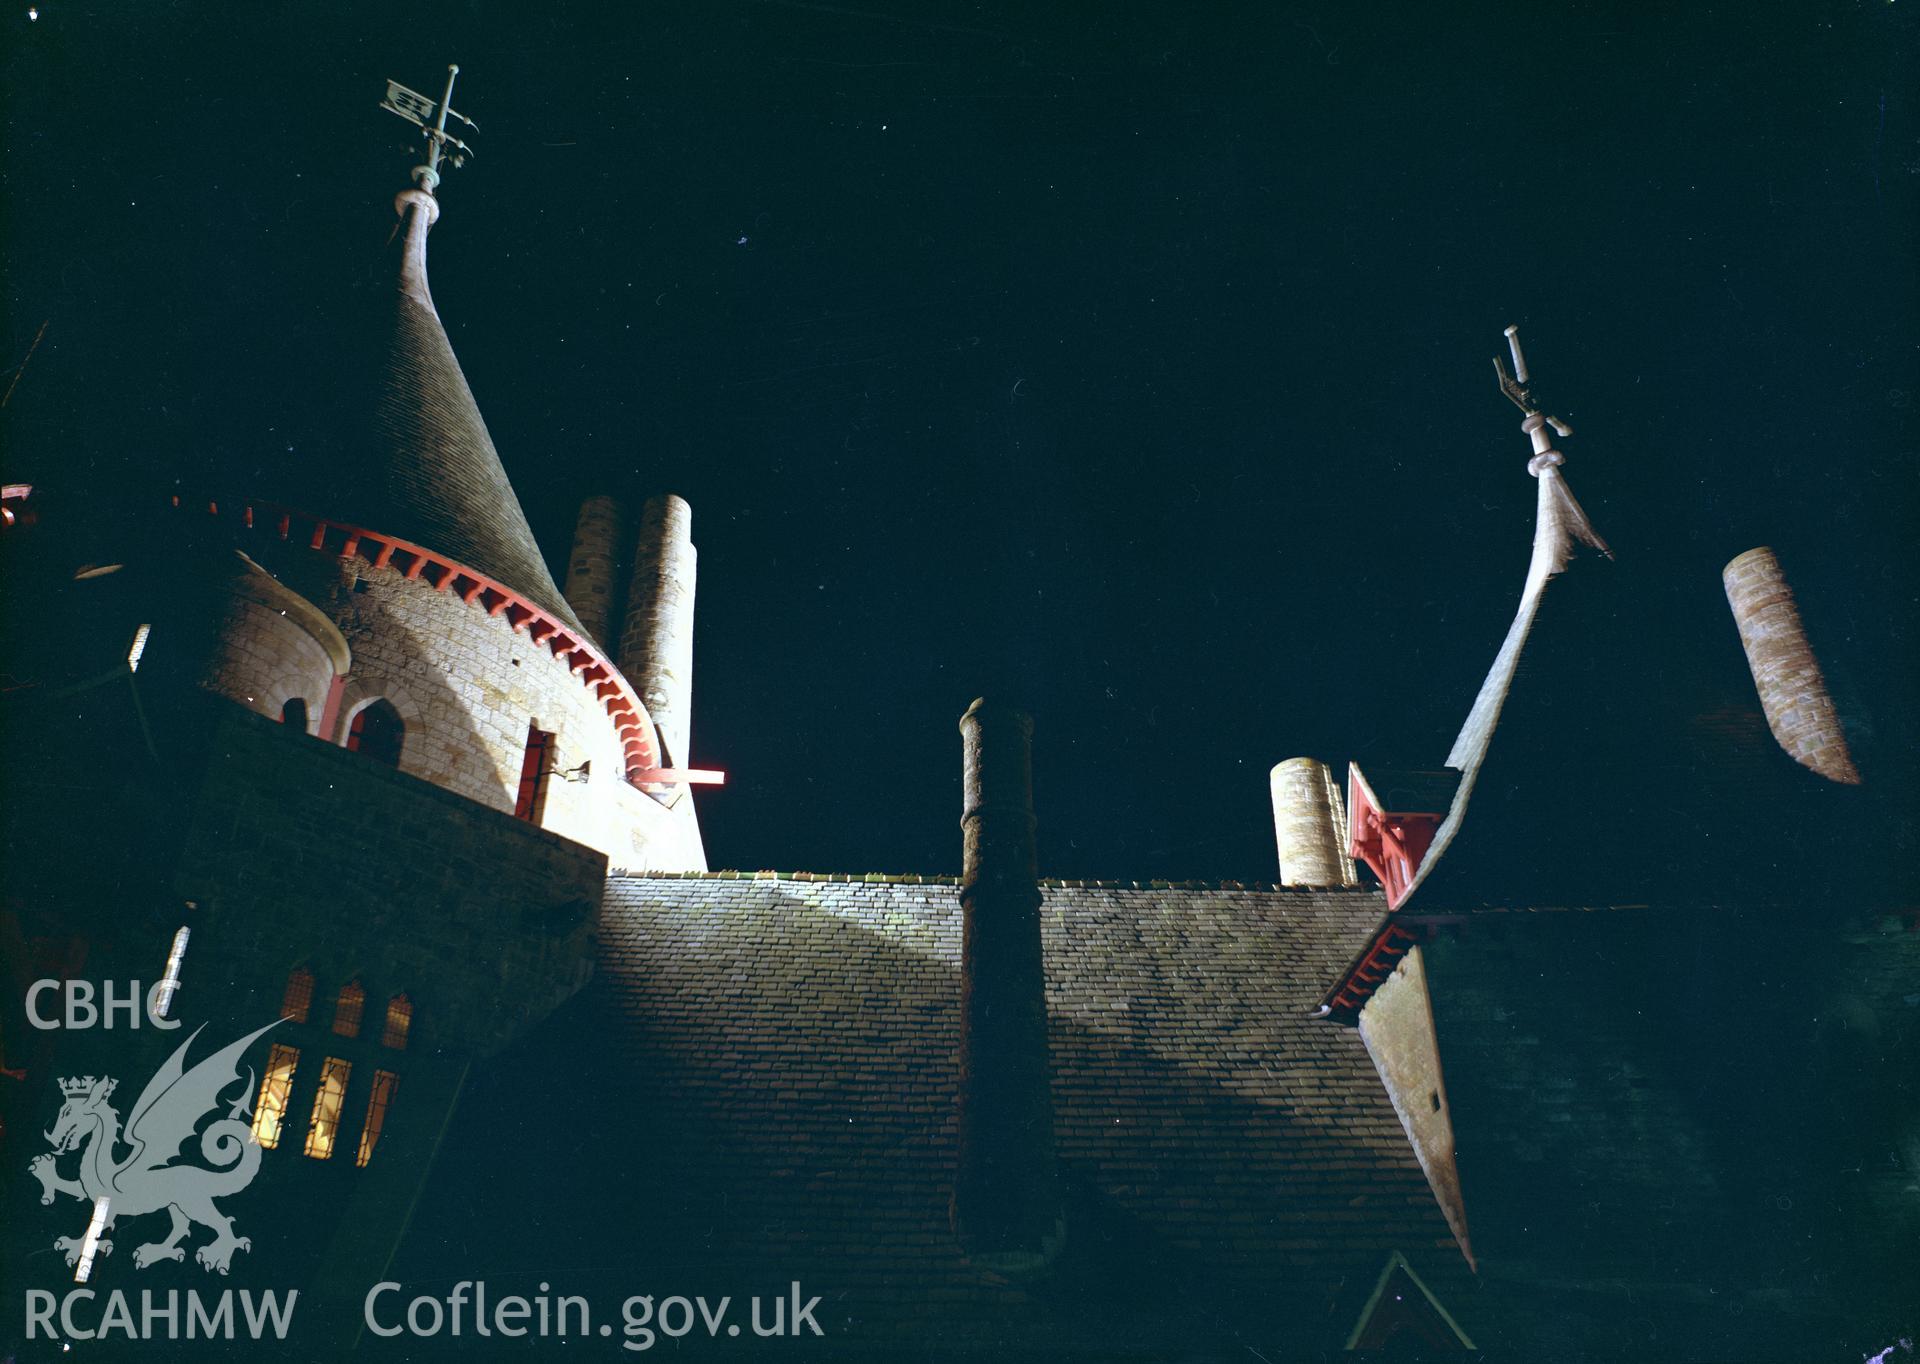 D.O.E photographs of Castell Coch. Floodlit.